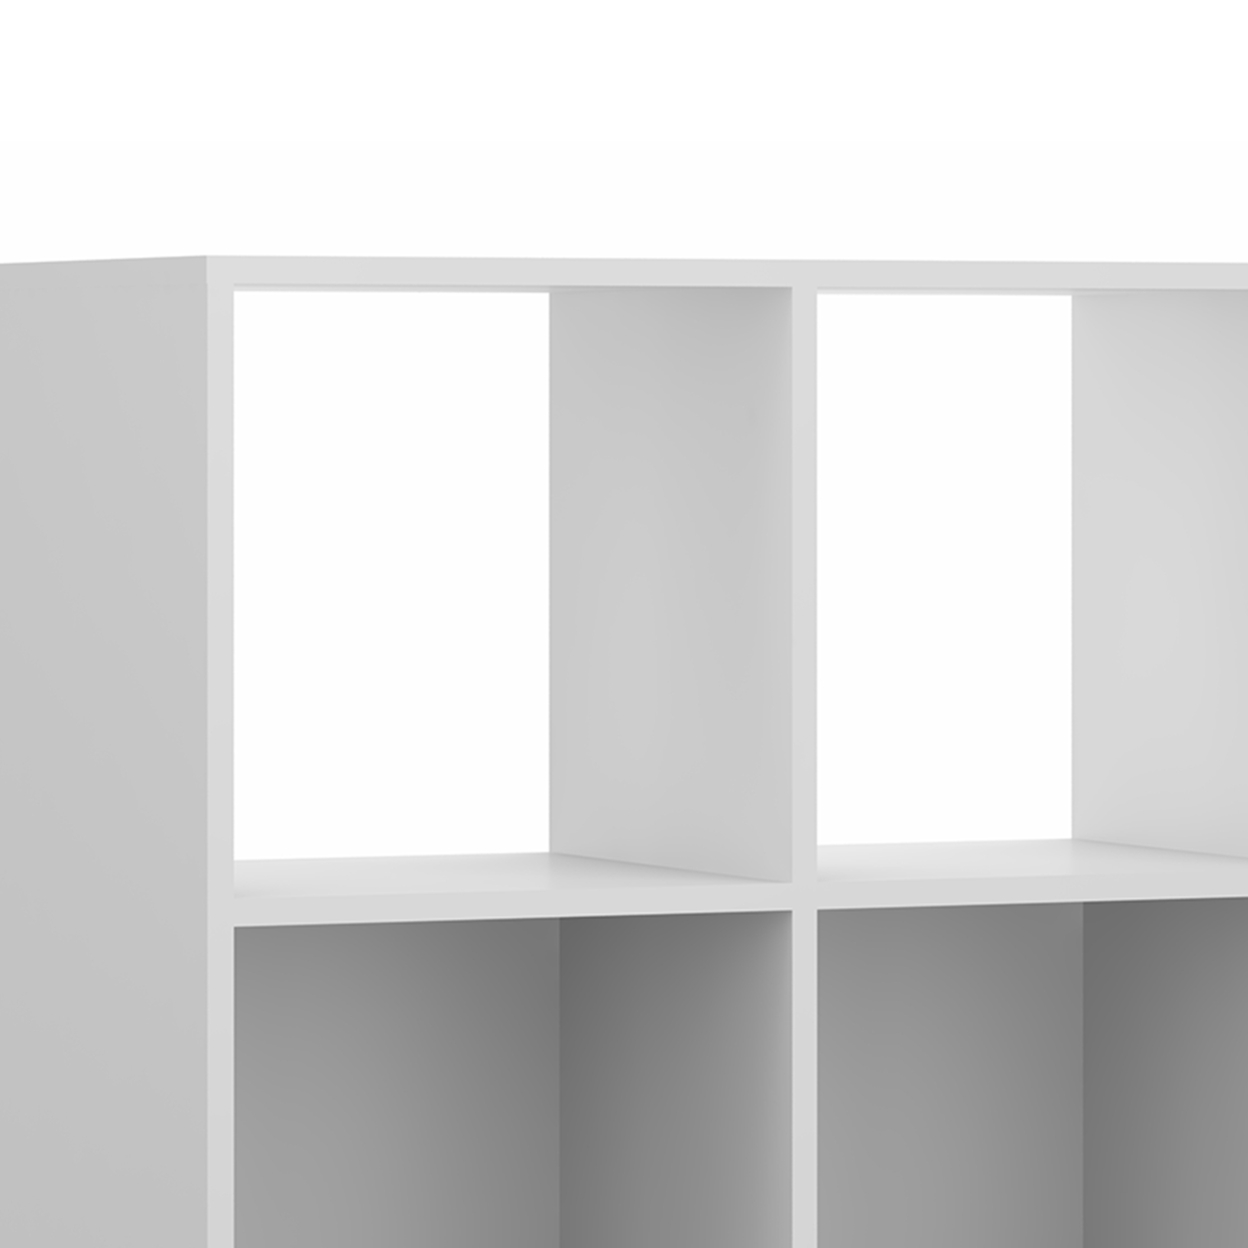 Multipurpose Storage Shelf With 4 Open Compartments, White And Chrome- Saltoro Sherpi